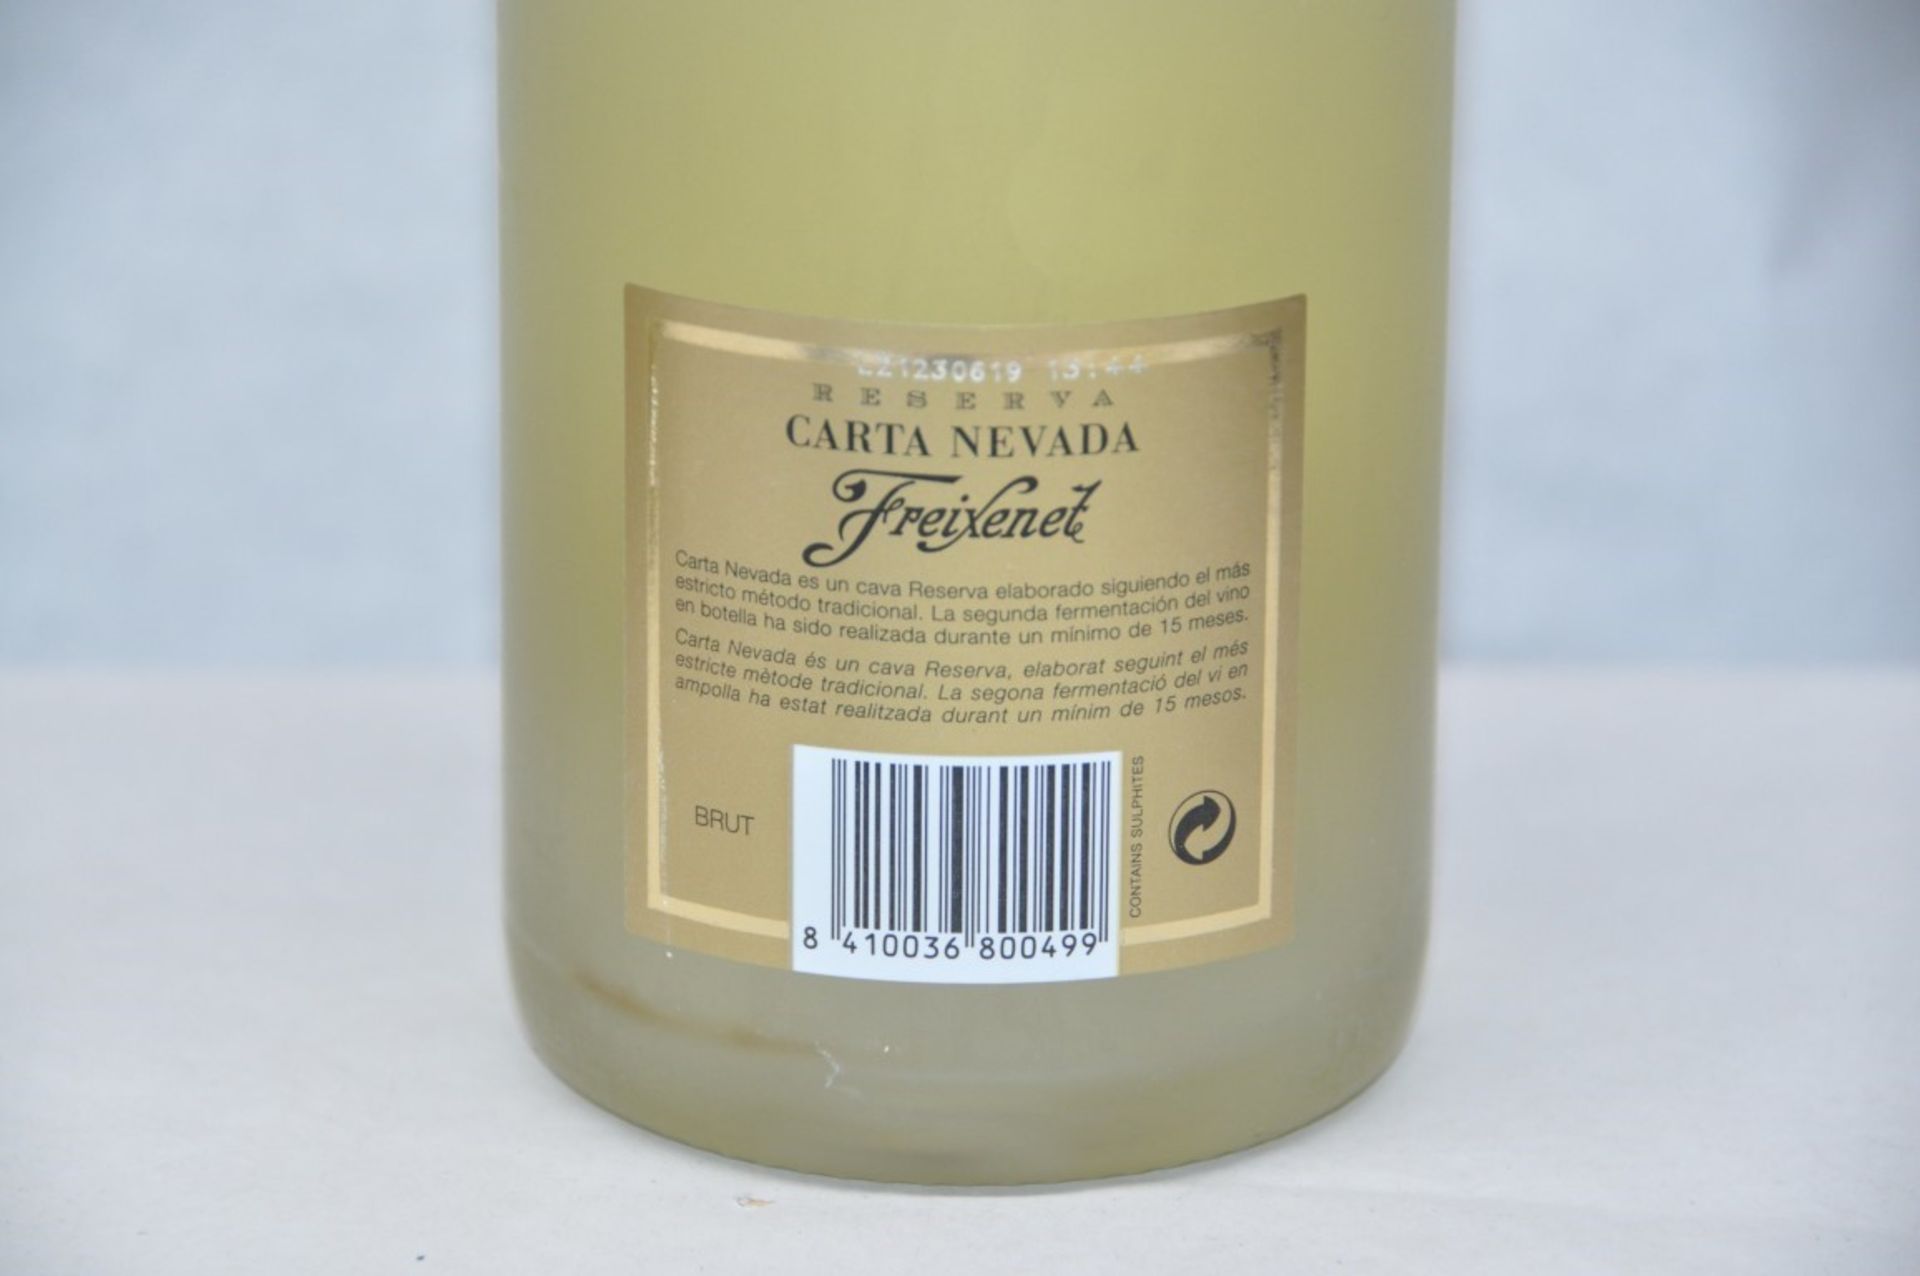 1 x Reserva Freixenet Carta Nevada Cava - 75cl Bottle - Sealed UK Stock - 11.5% Volume - CL103 - Ref - Image 2 of 4